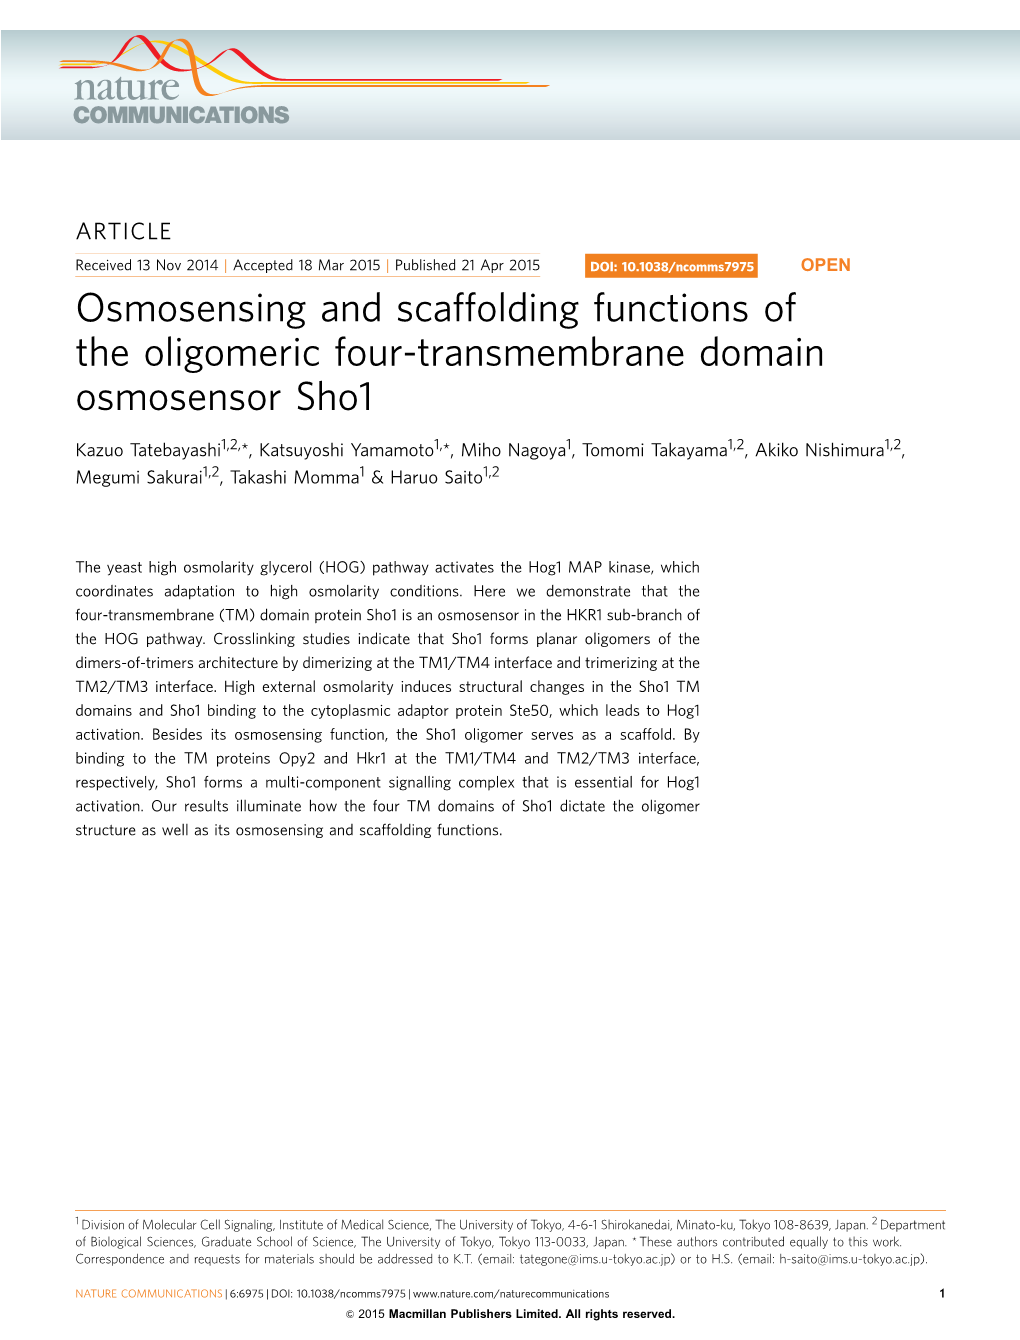 Osmosensing and Scaffolding Functions of the Oligomeric Four-Transmembrane Domain Osmosensor Sho1